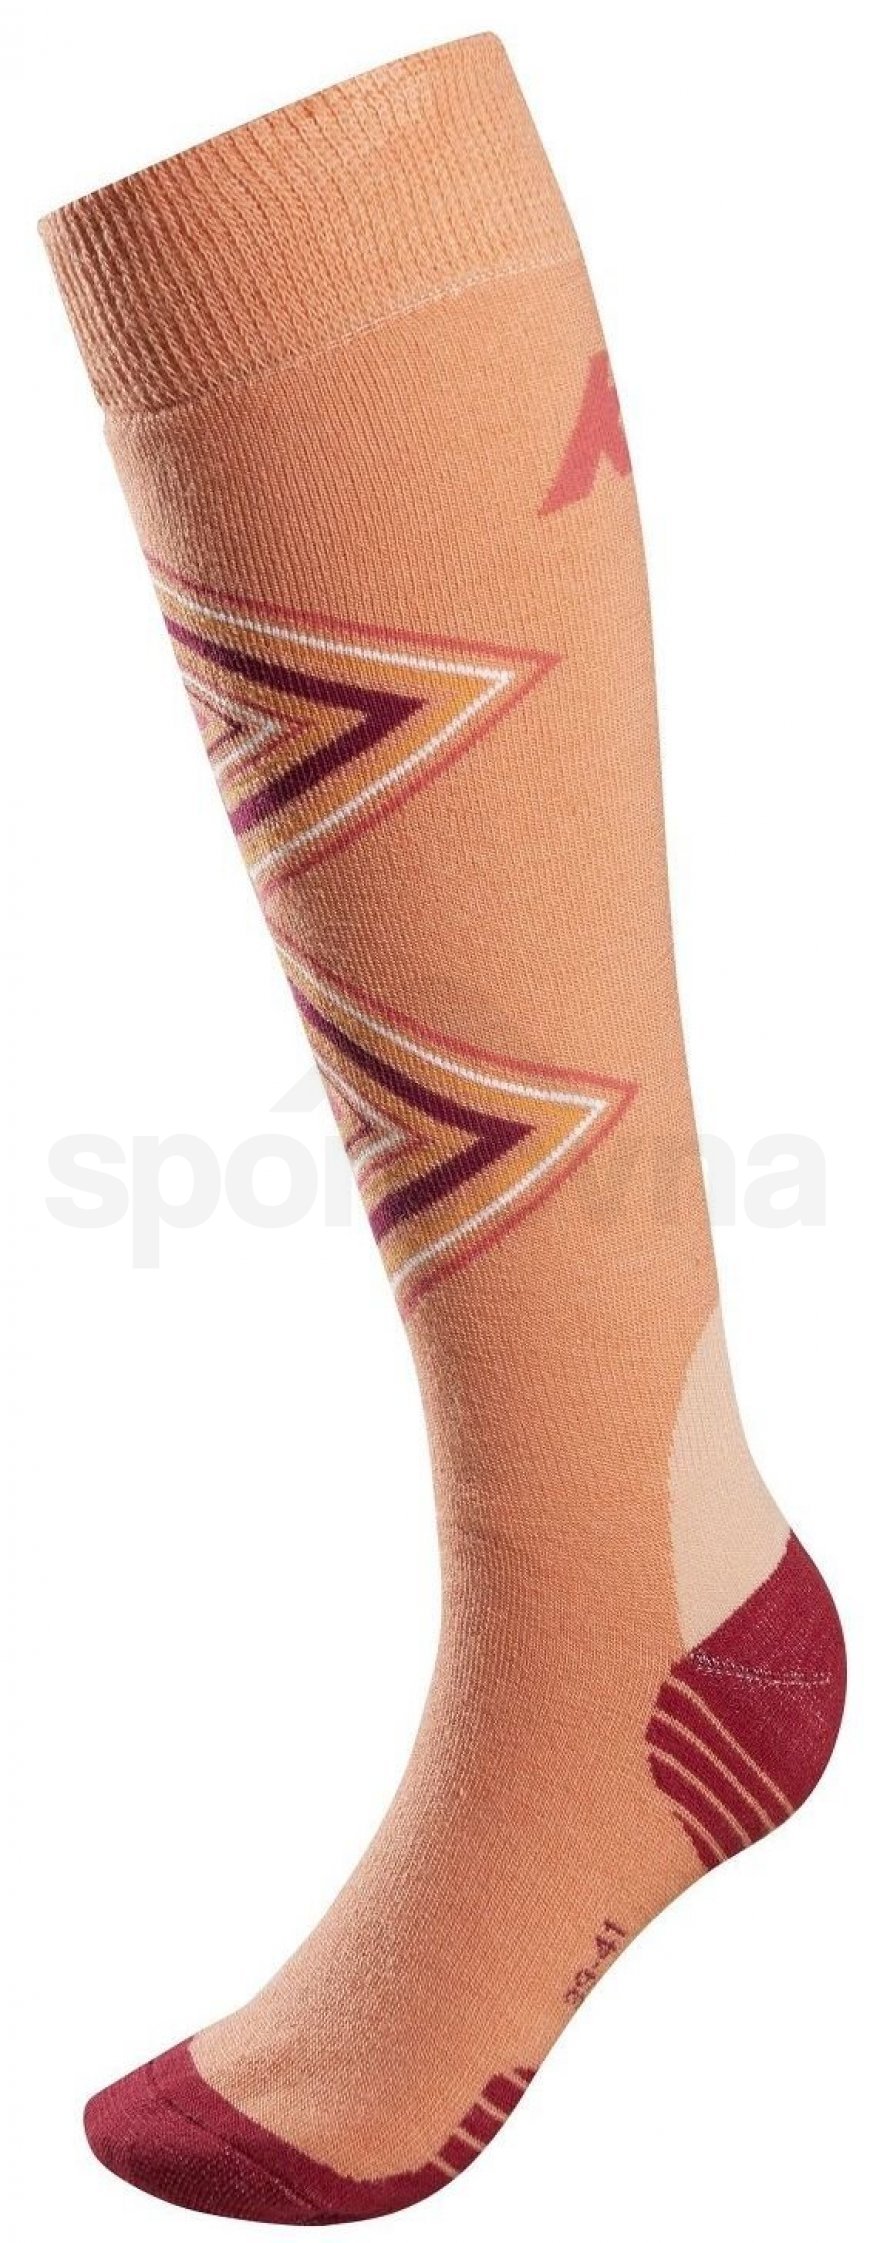 Ponožky K2 Iris / 2 páry - oranžová/šedá